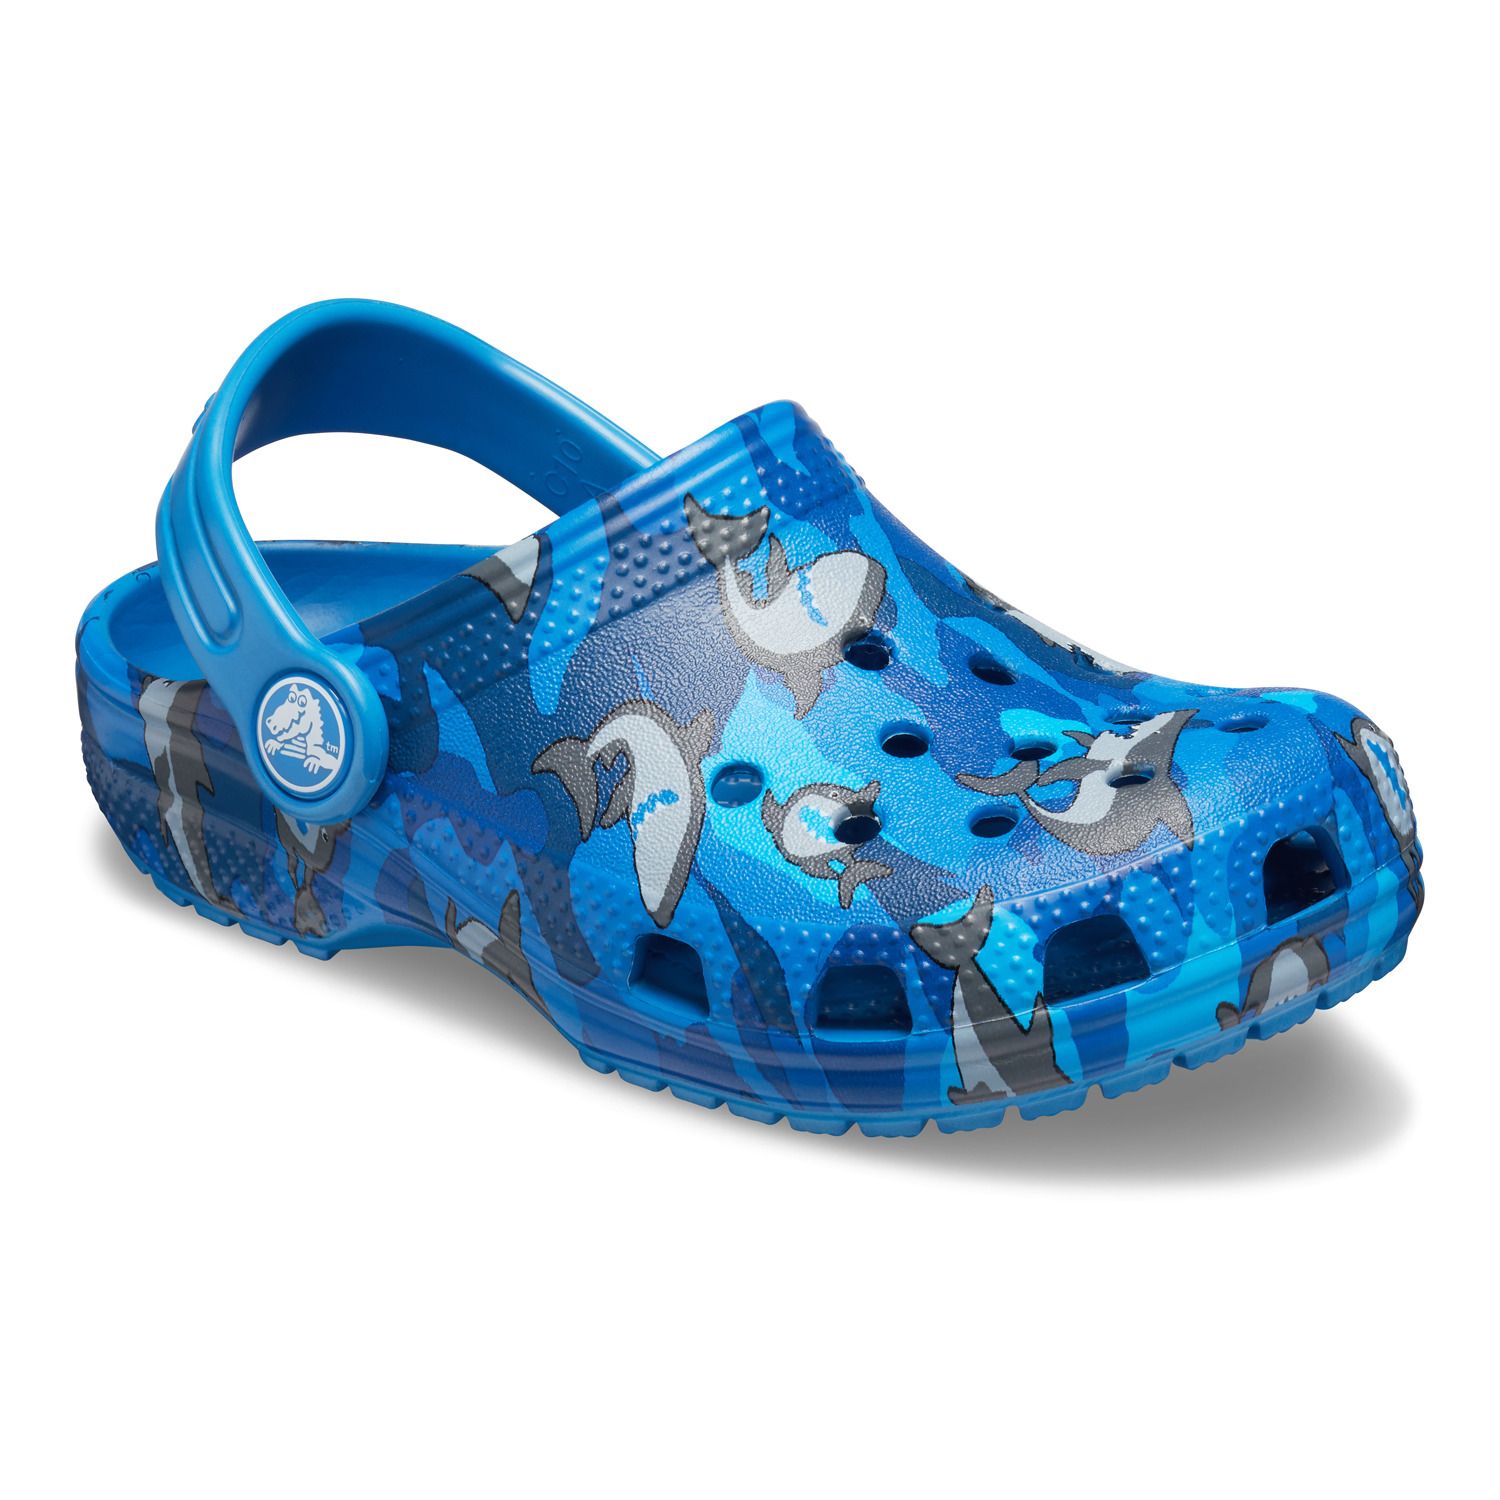 kohl's crocs shoes